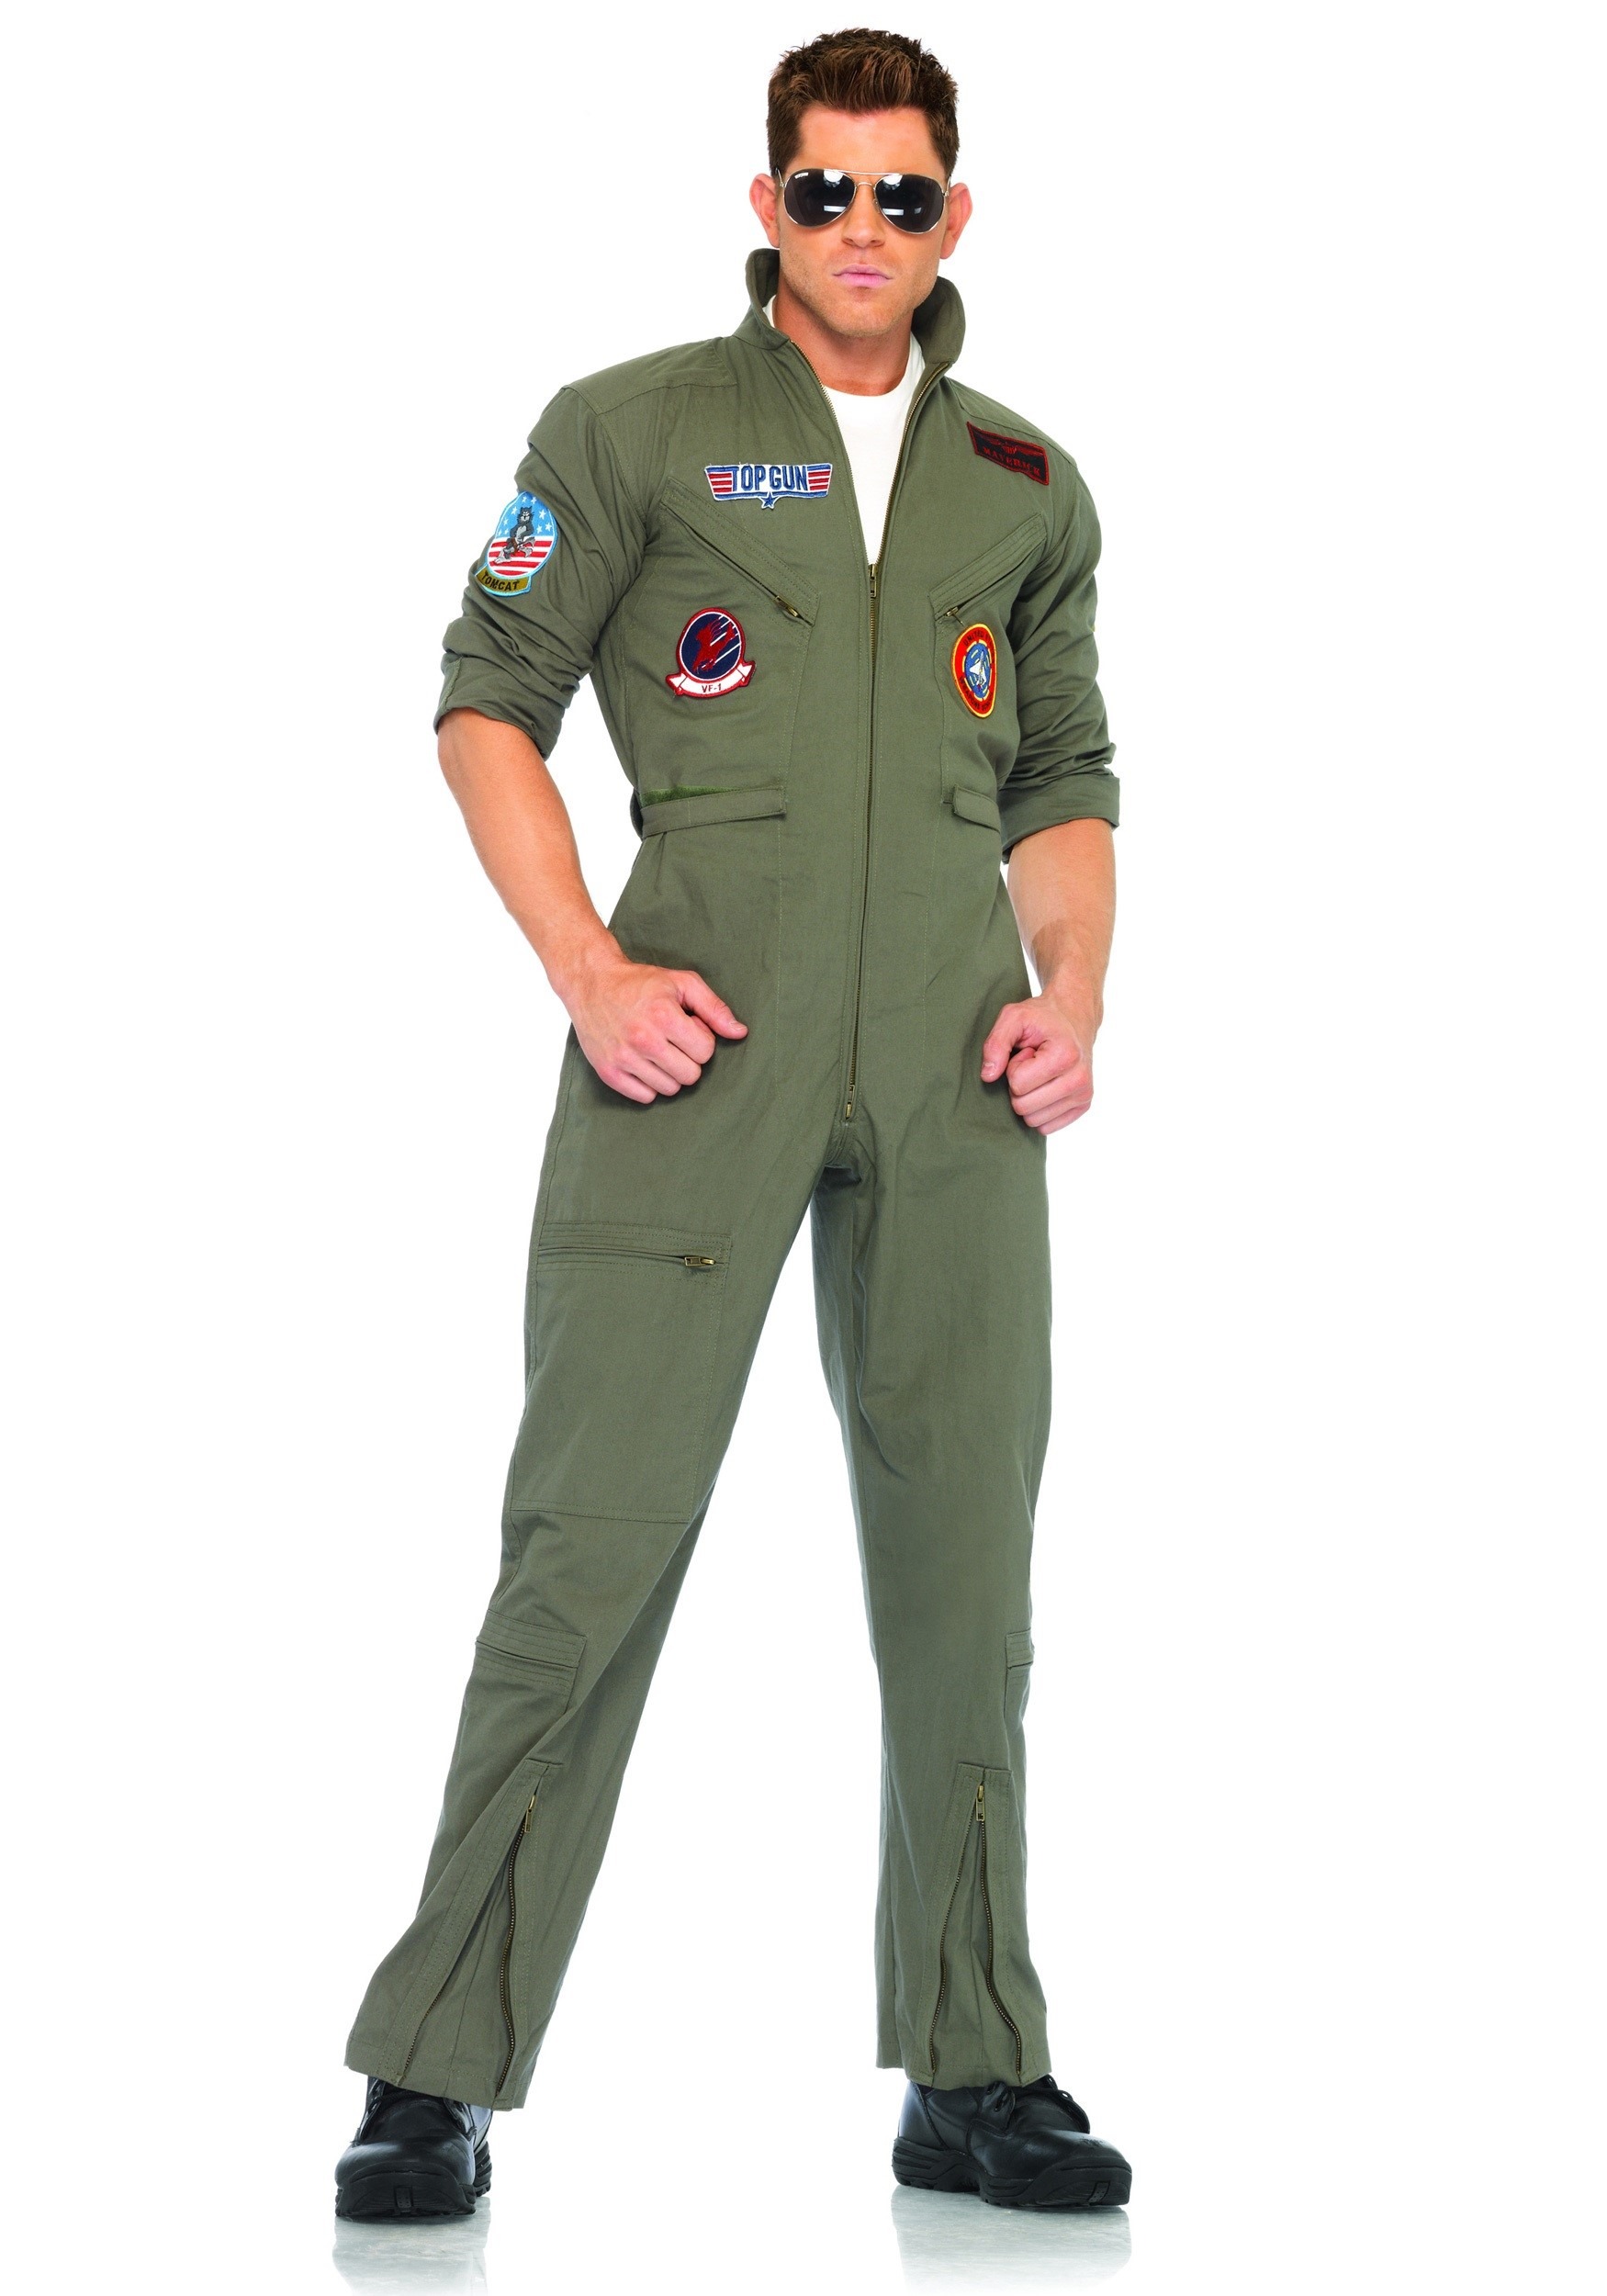 halloweencostumes.com | Men's Top Gun Flight Suit Costume